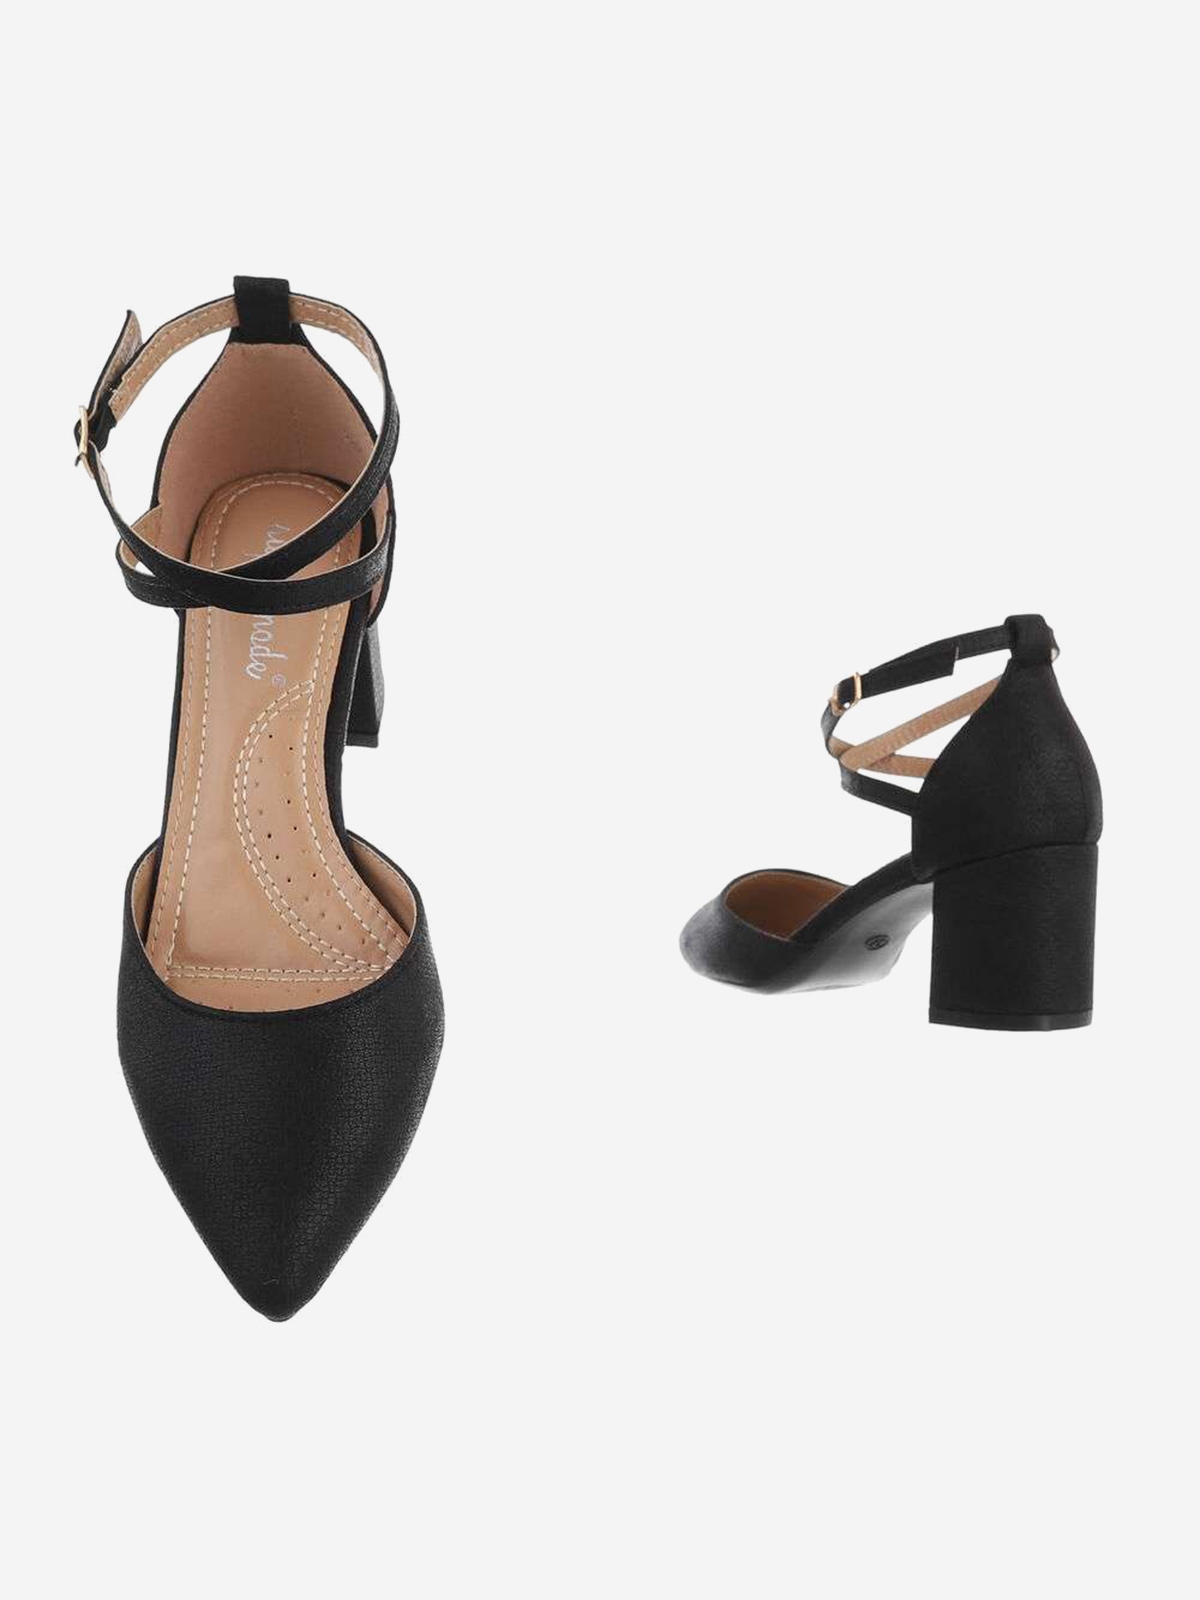 Women's shoes with comfortable heel in black